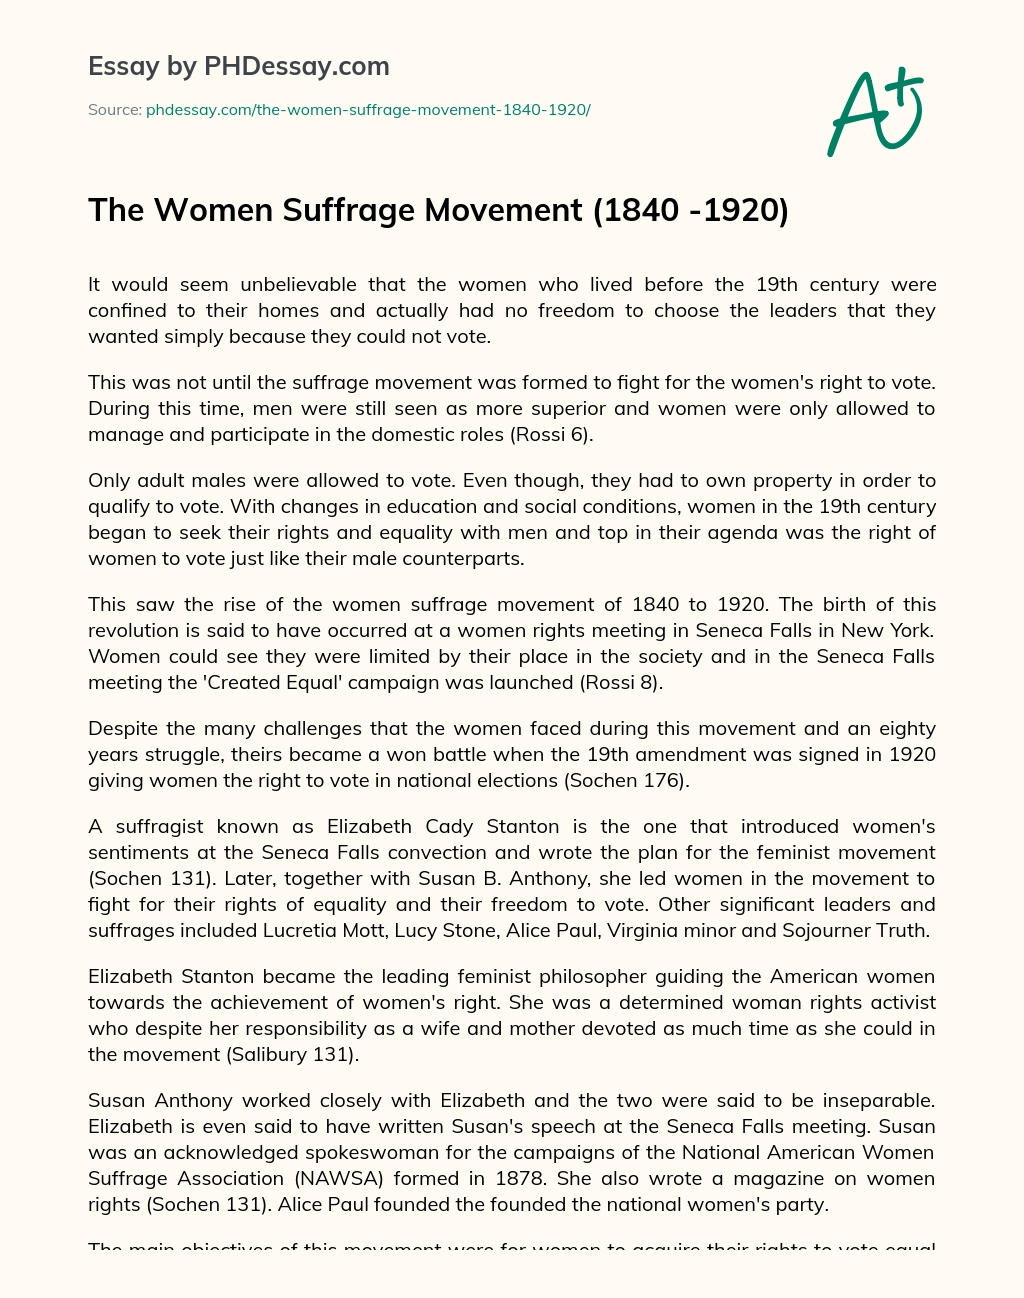 The Women Suffrage Movement (1840 -1920) essay